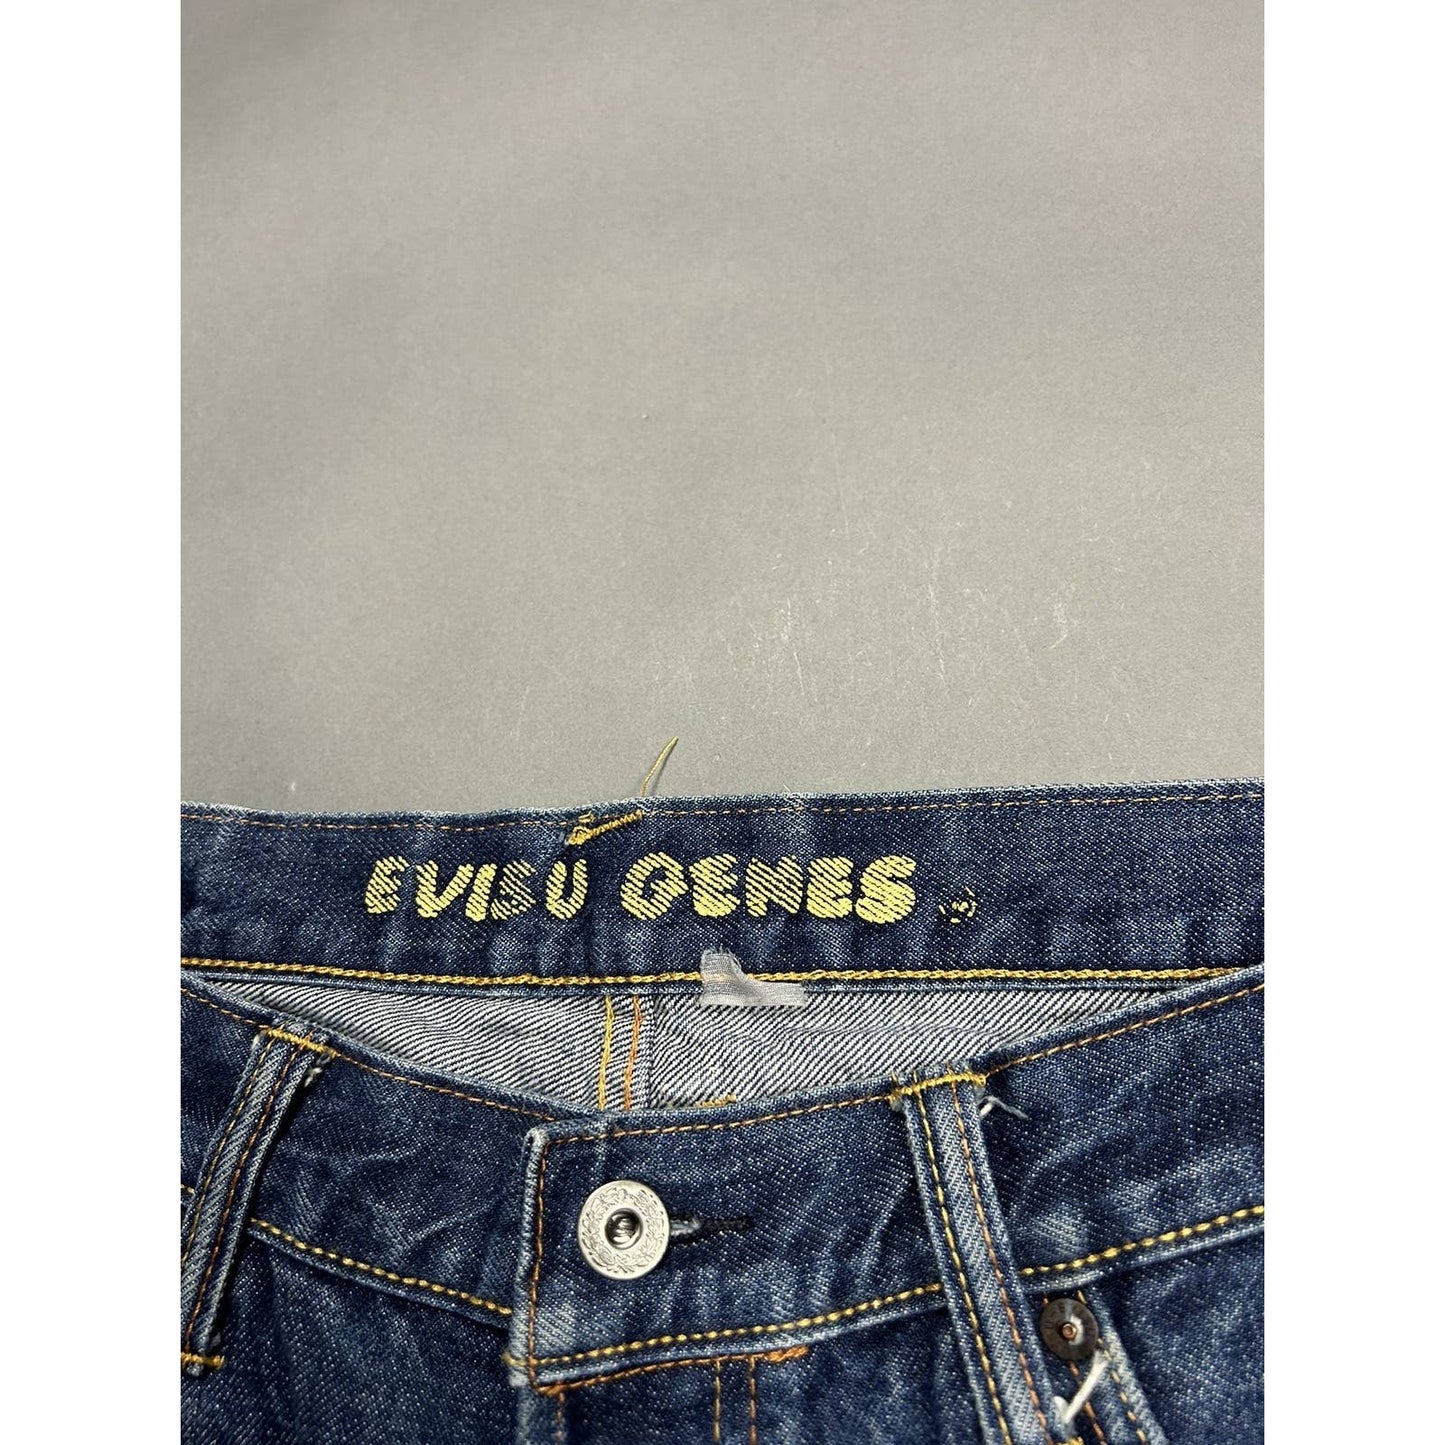 Evisu jeans vintage selvedge denim navy white seagulls Genes